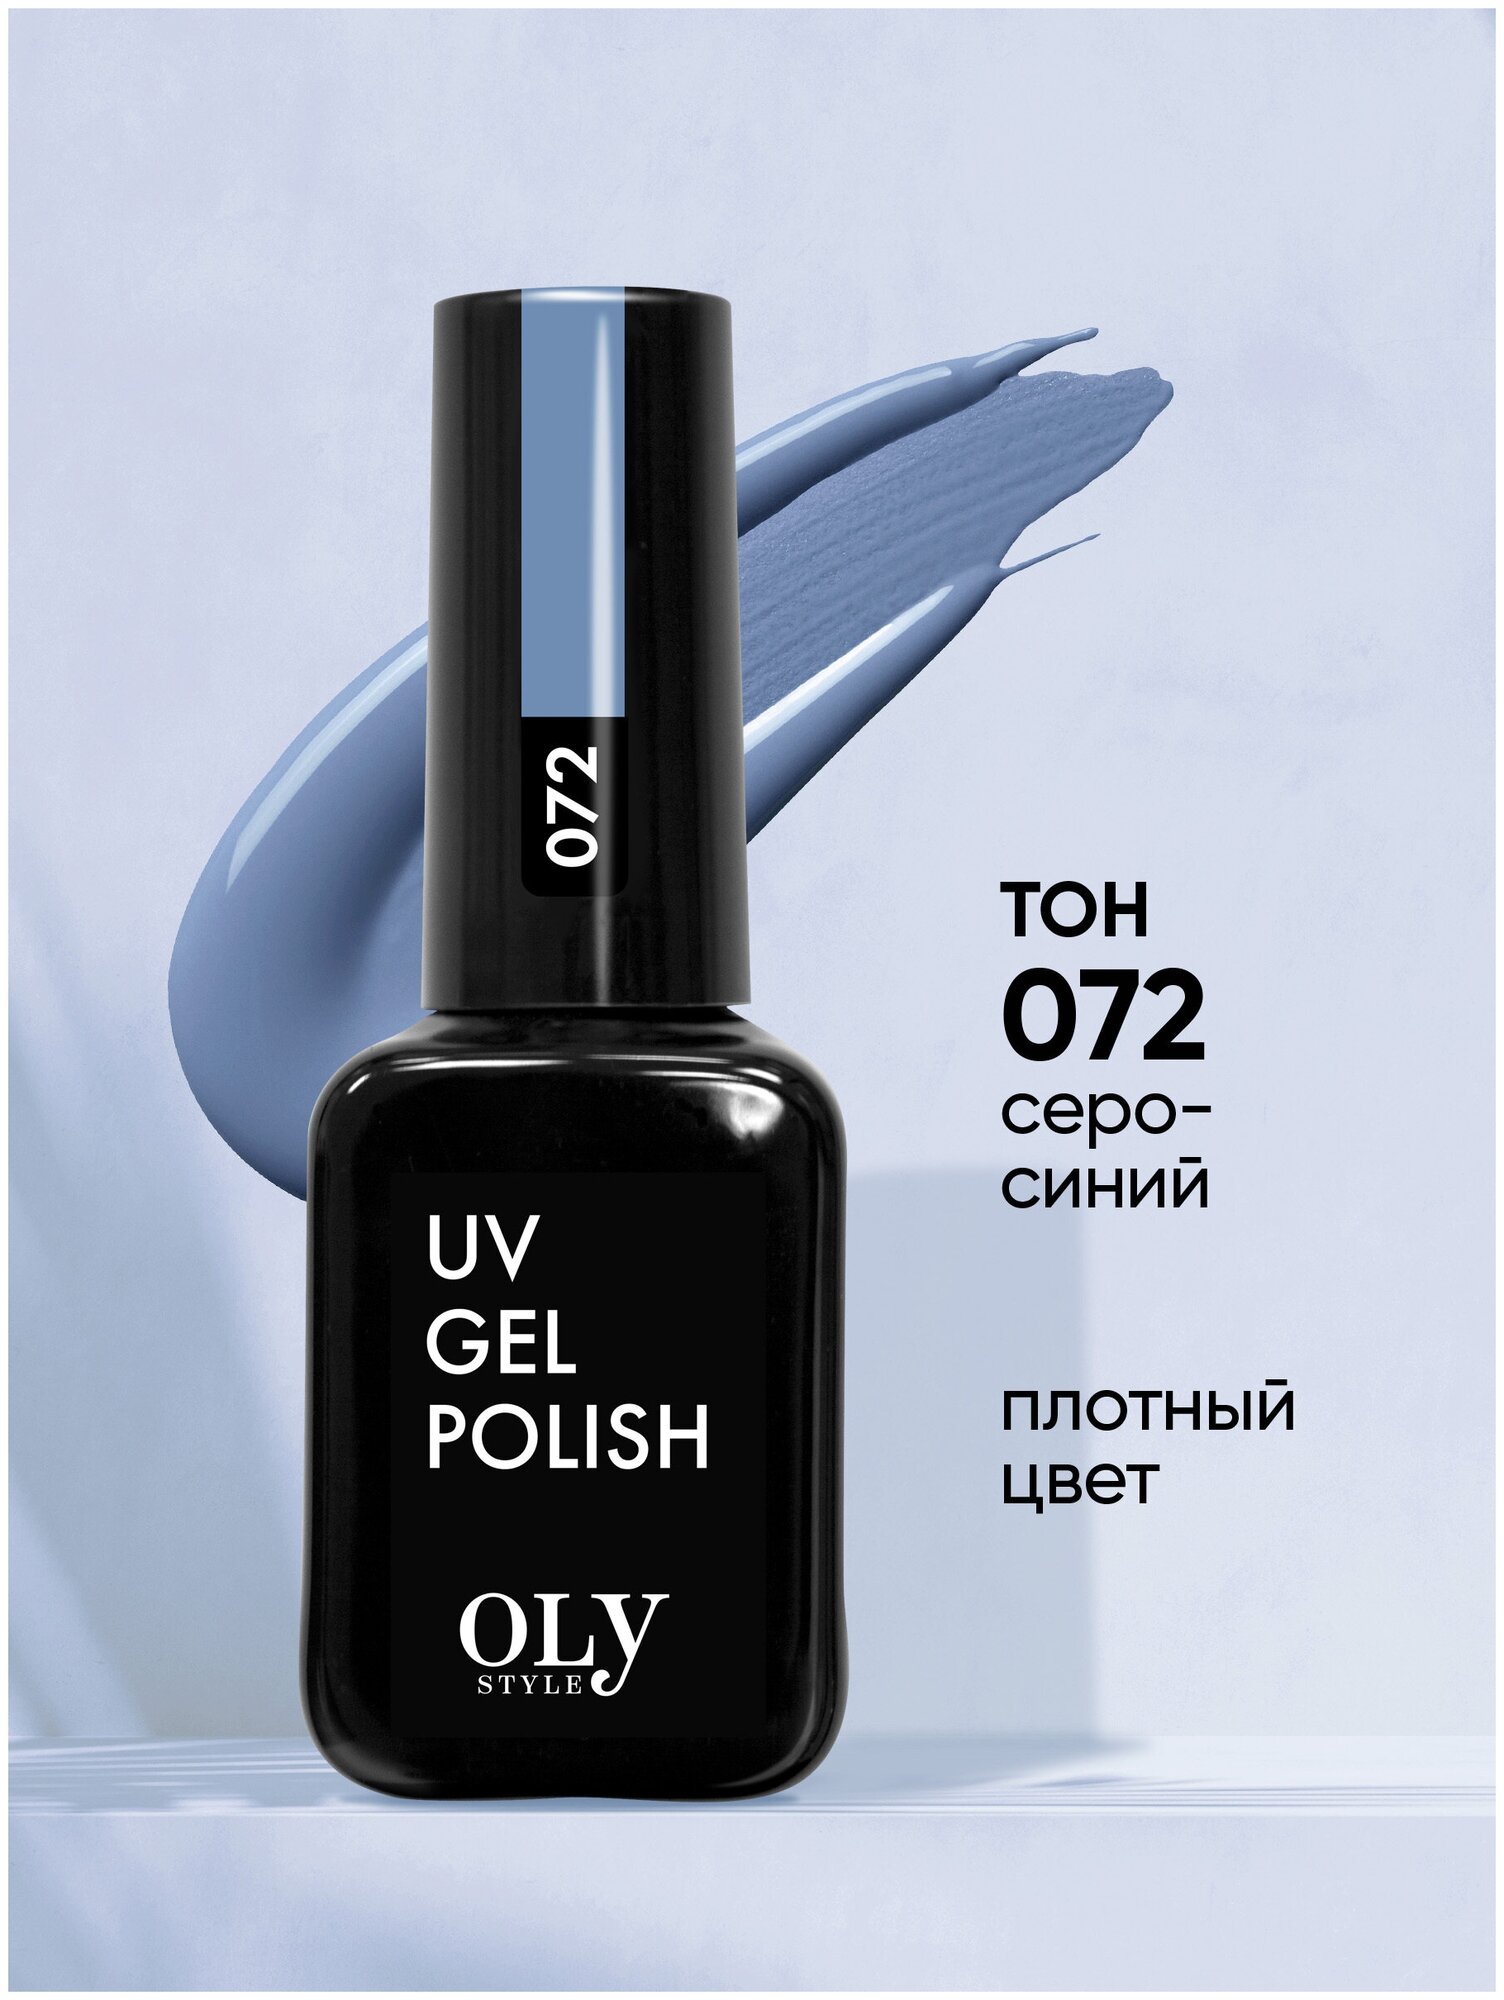 Olystyle Гель-лак для ногтей OLS UV, тон 072 серо-синий, 10мл